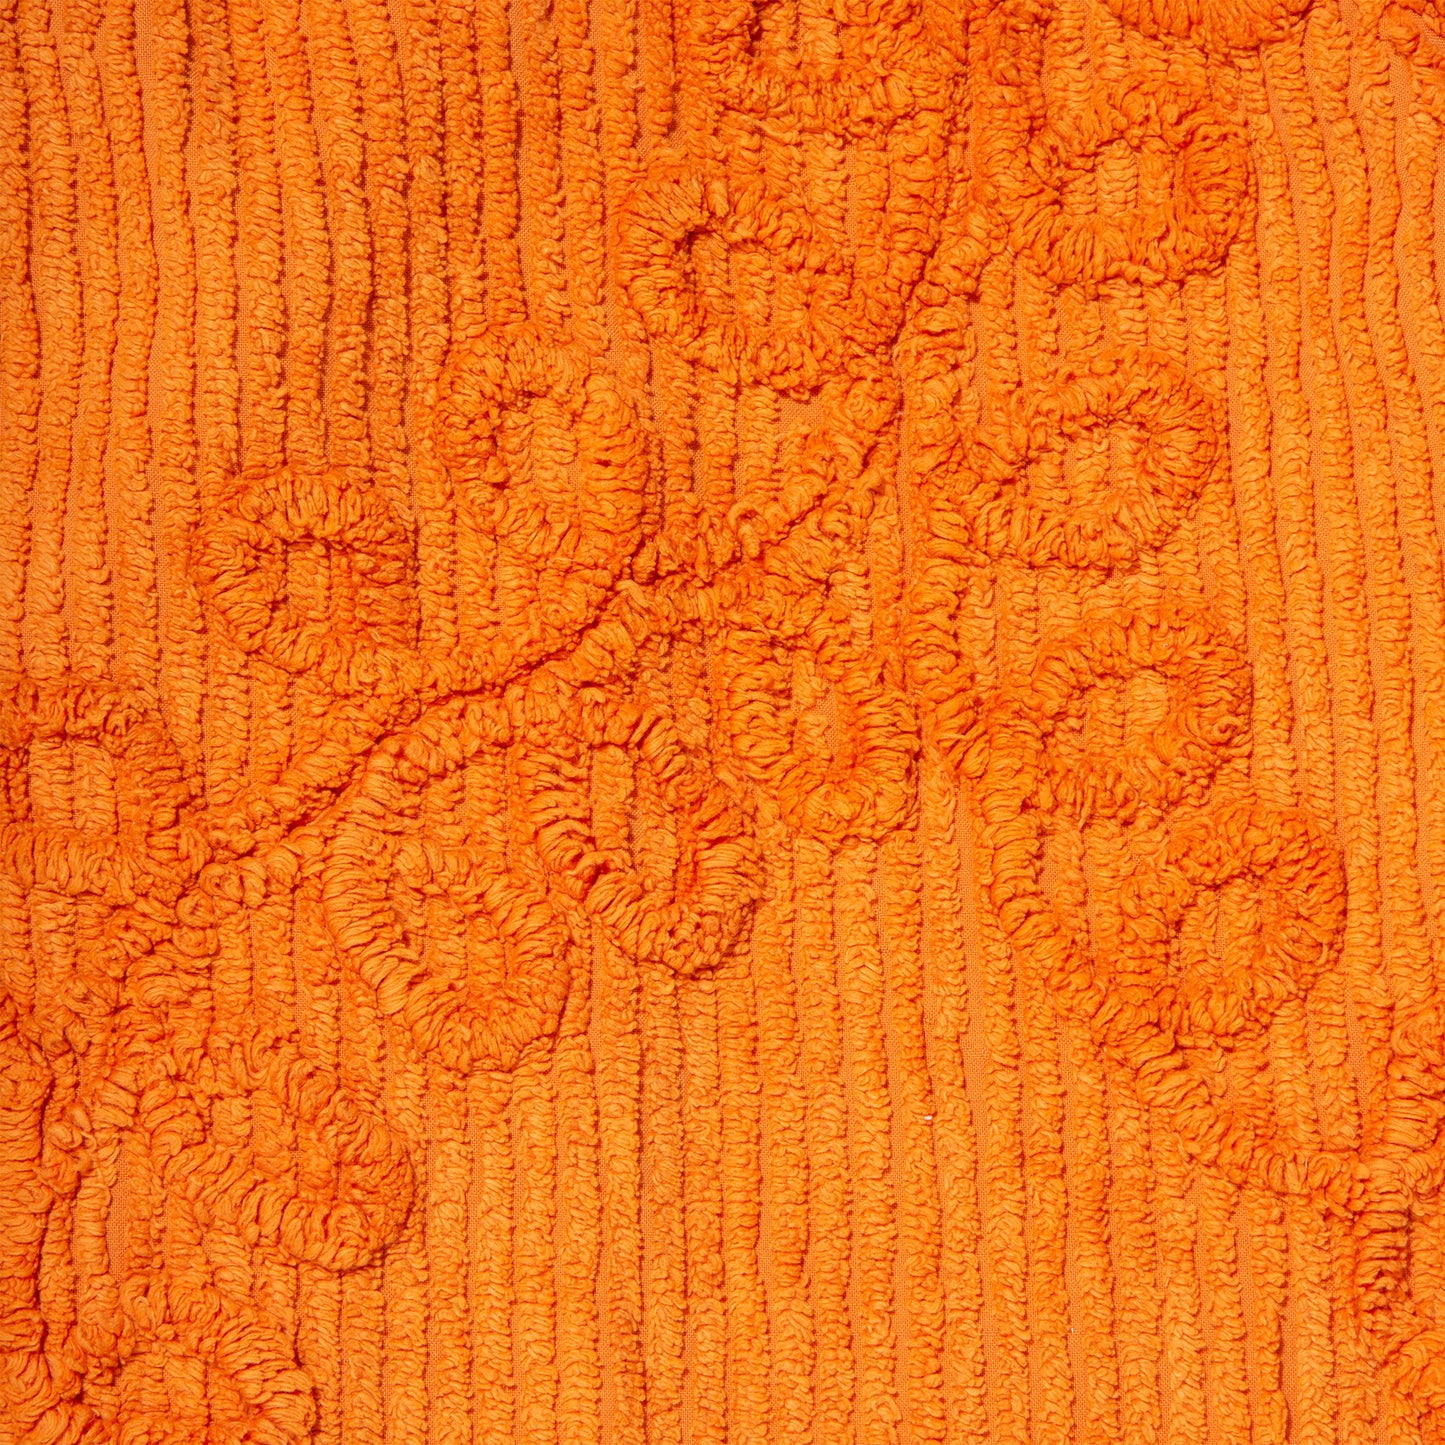 Espérou Shirt-Jacket ~ Orange